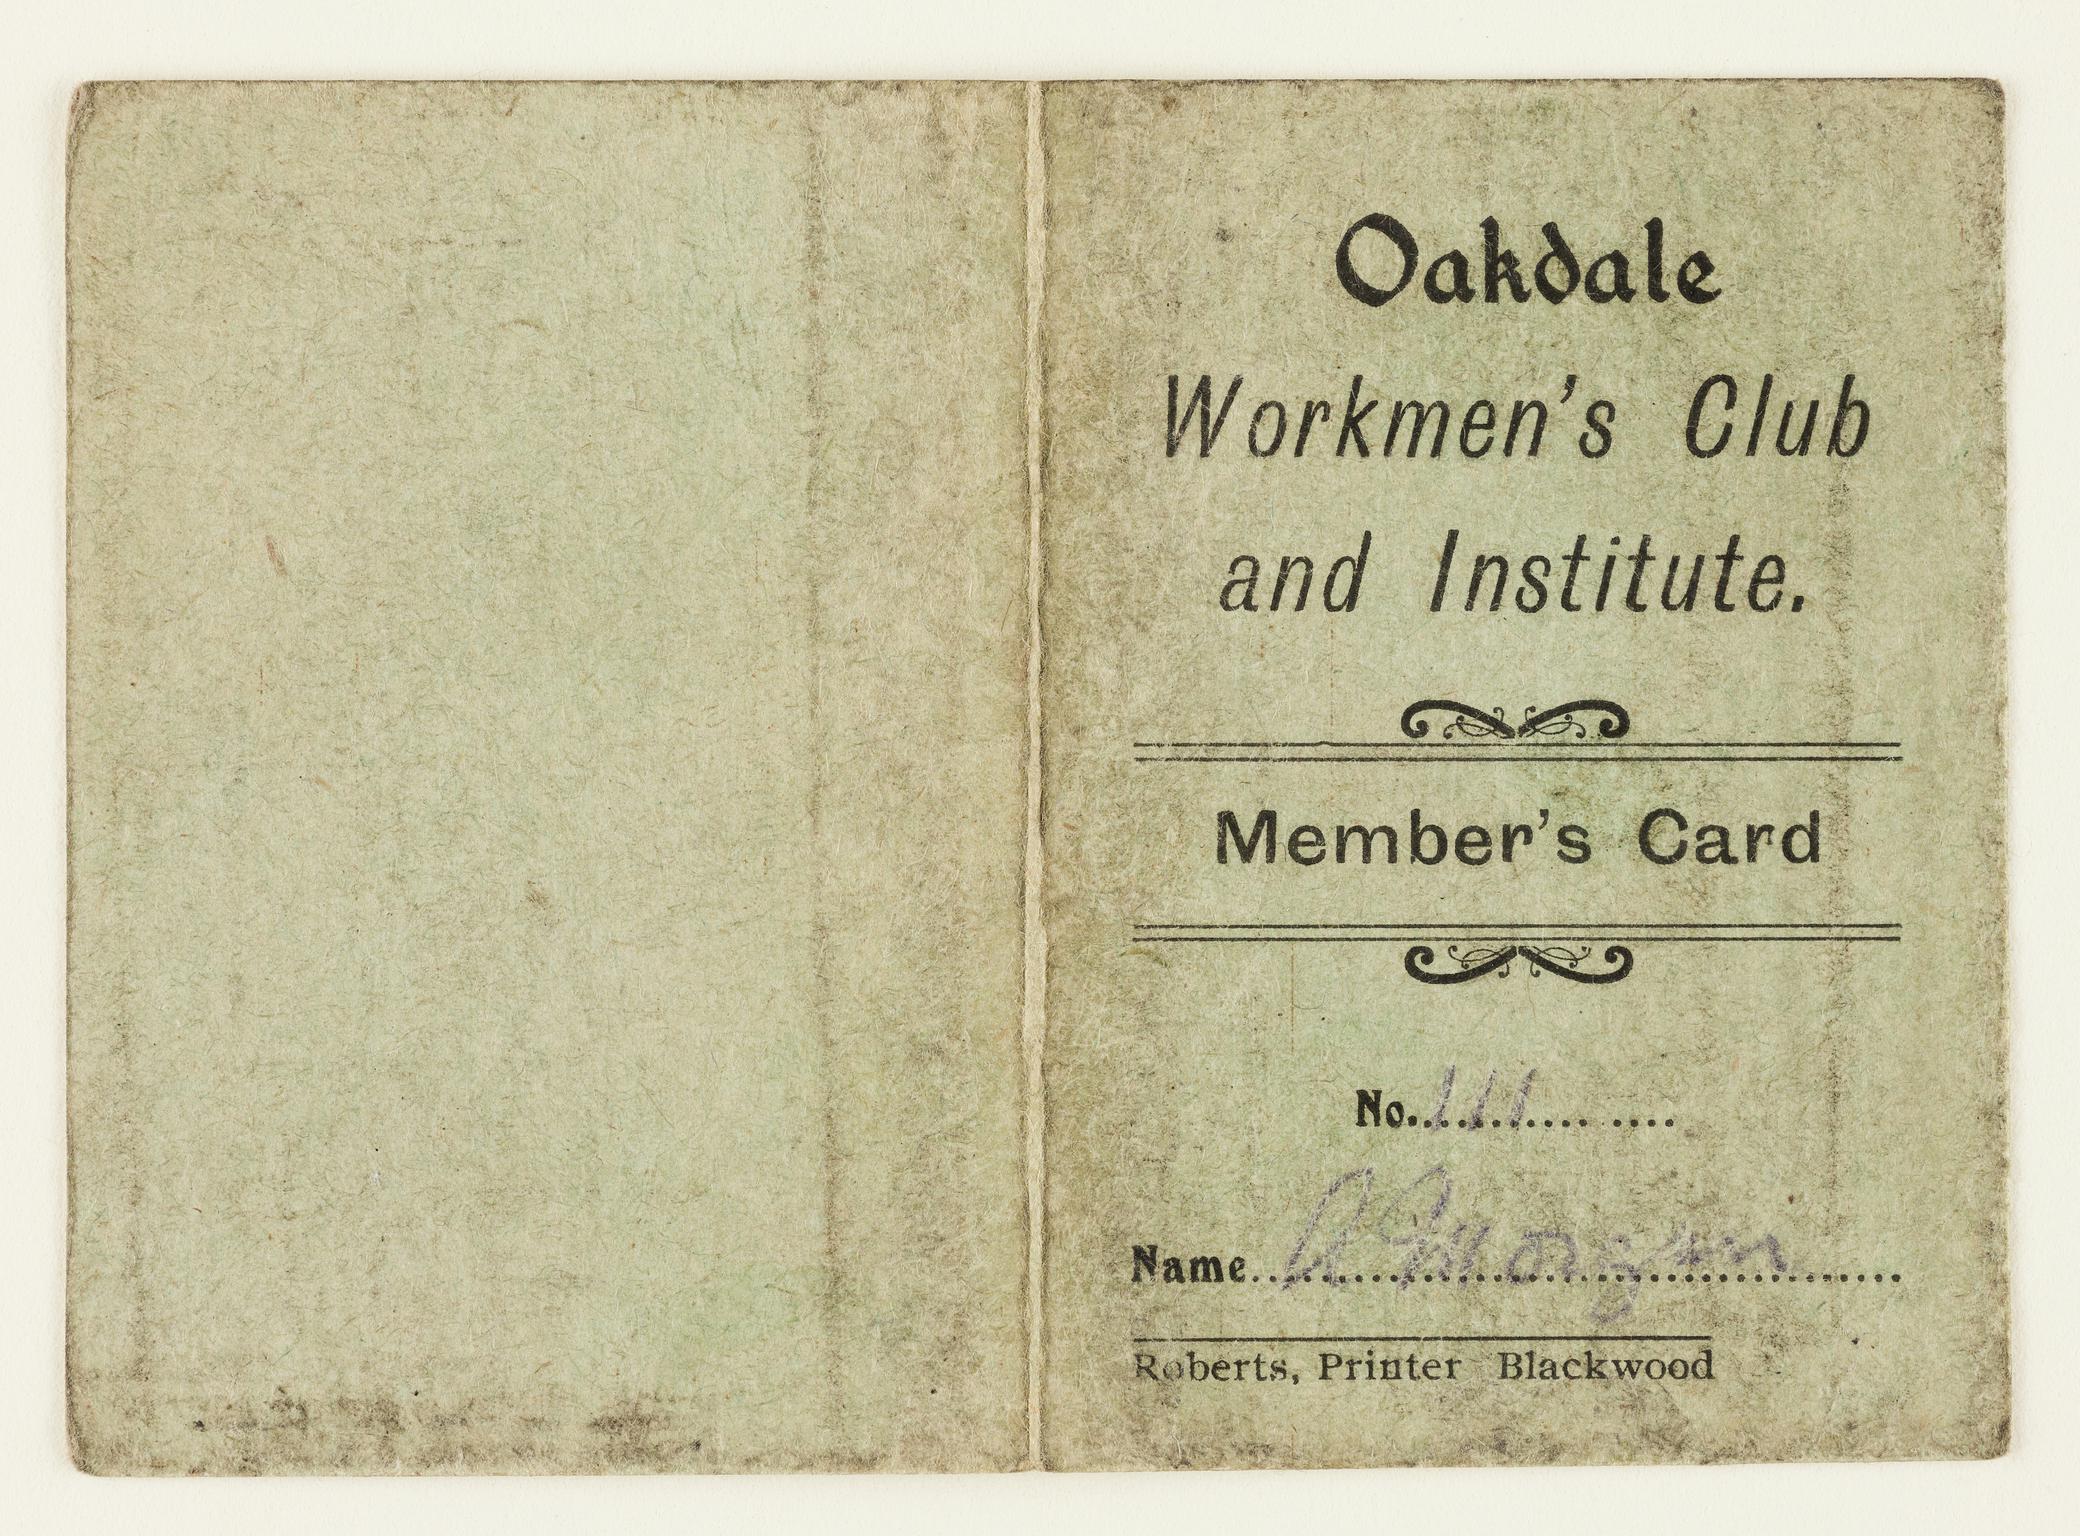 Oakdale Workmen's Club and Institute, membership card